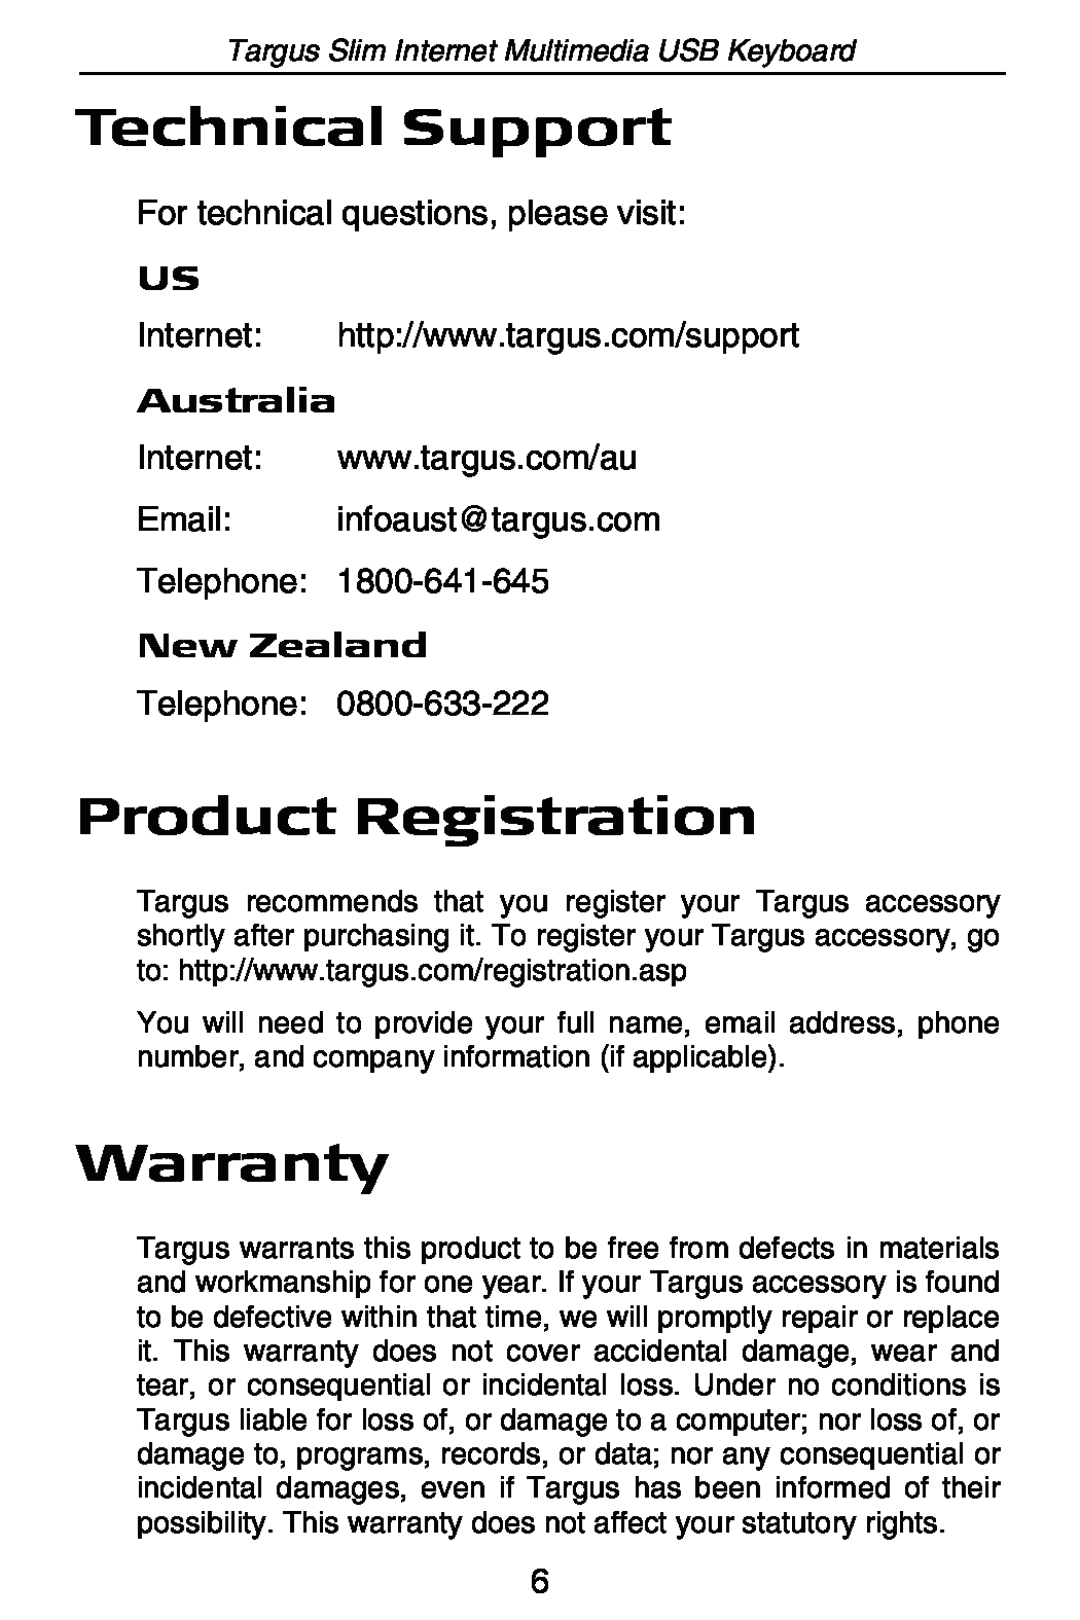 Targus internet multimedia USB keyboard Technical Support, Product Registration, Warranty, Australia, New Zealand 